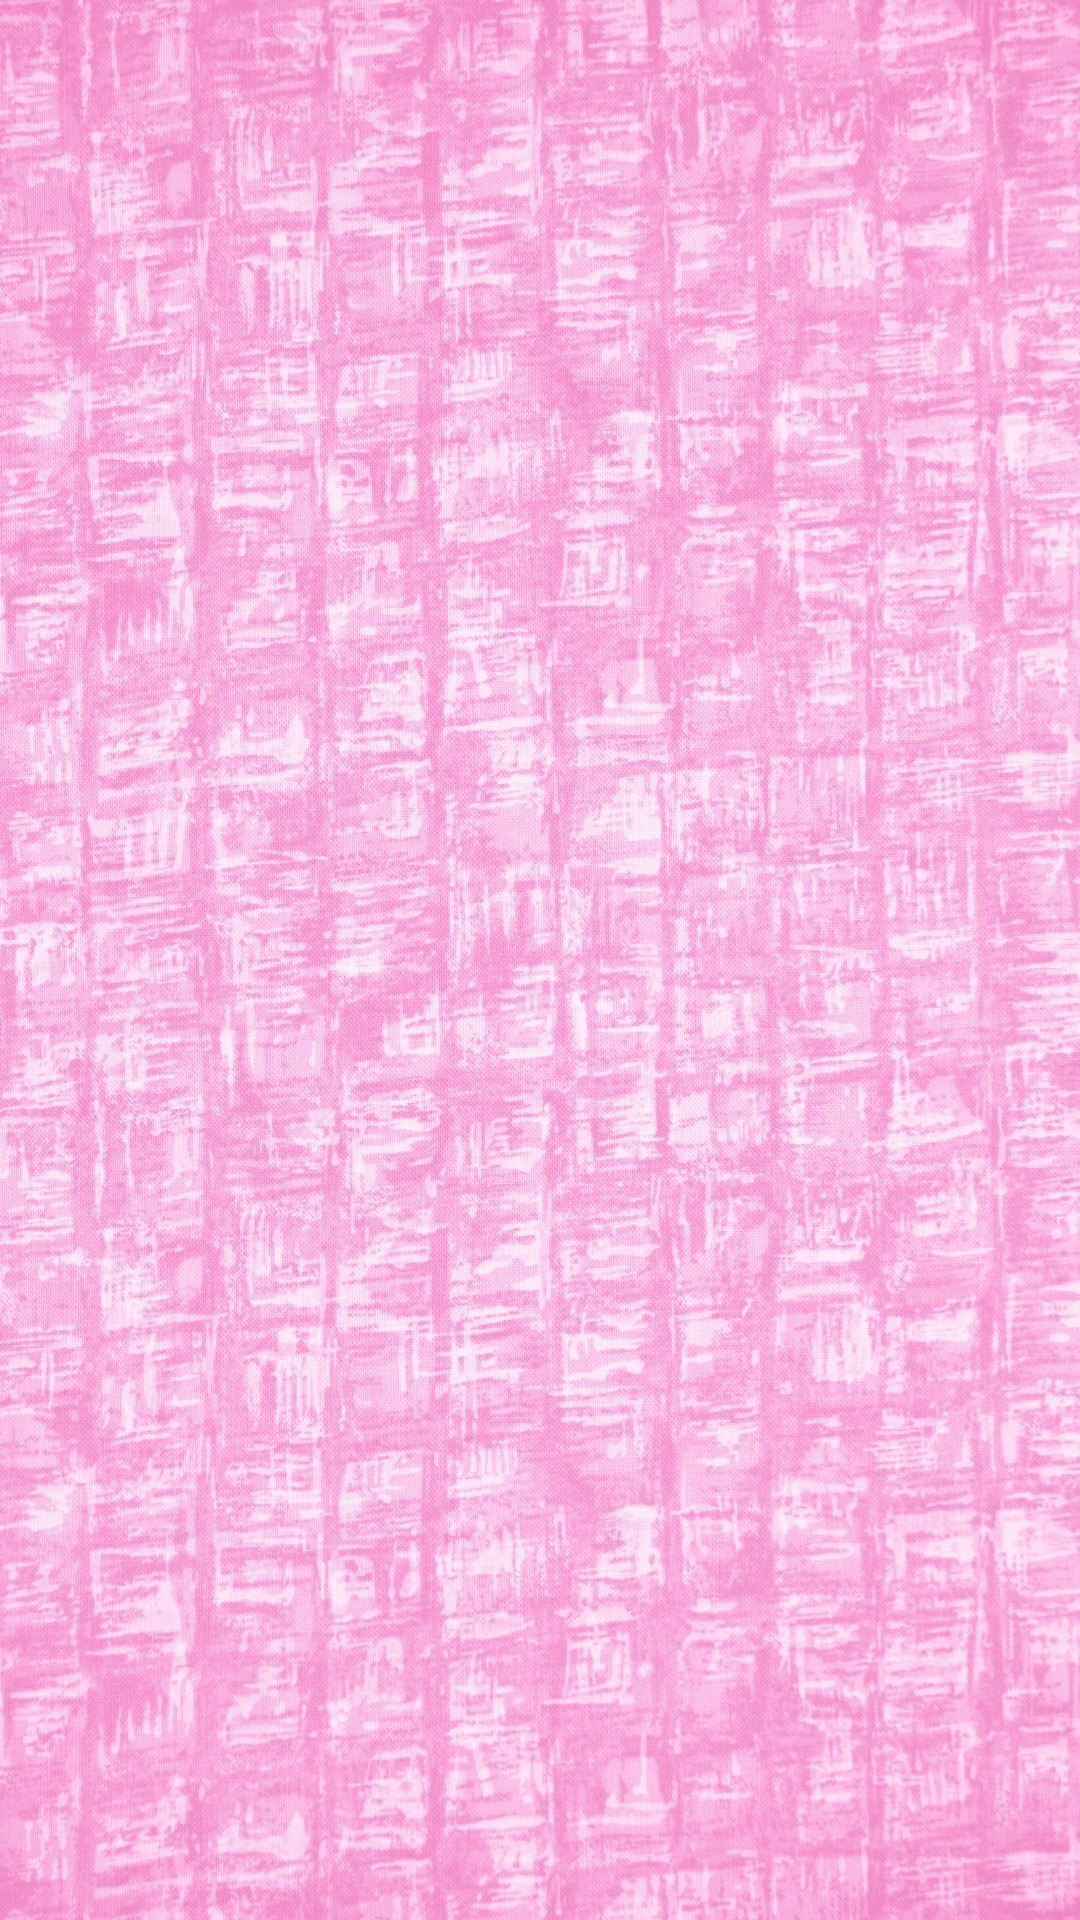 Pink Fabric Texture iPhone Wallpaper